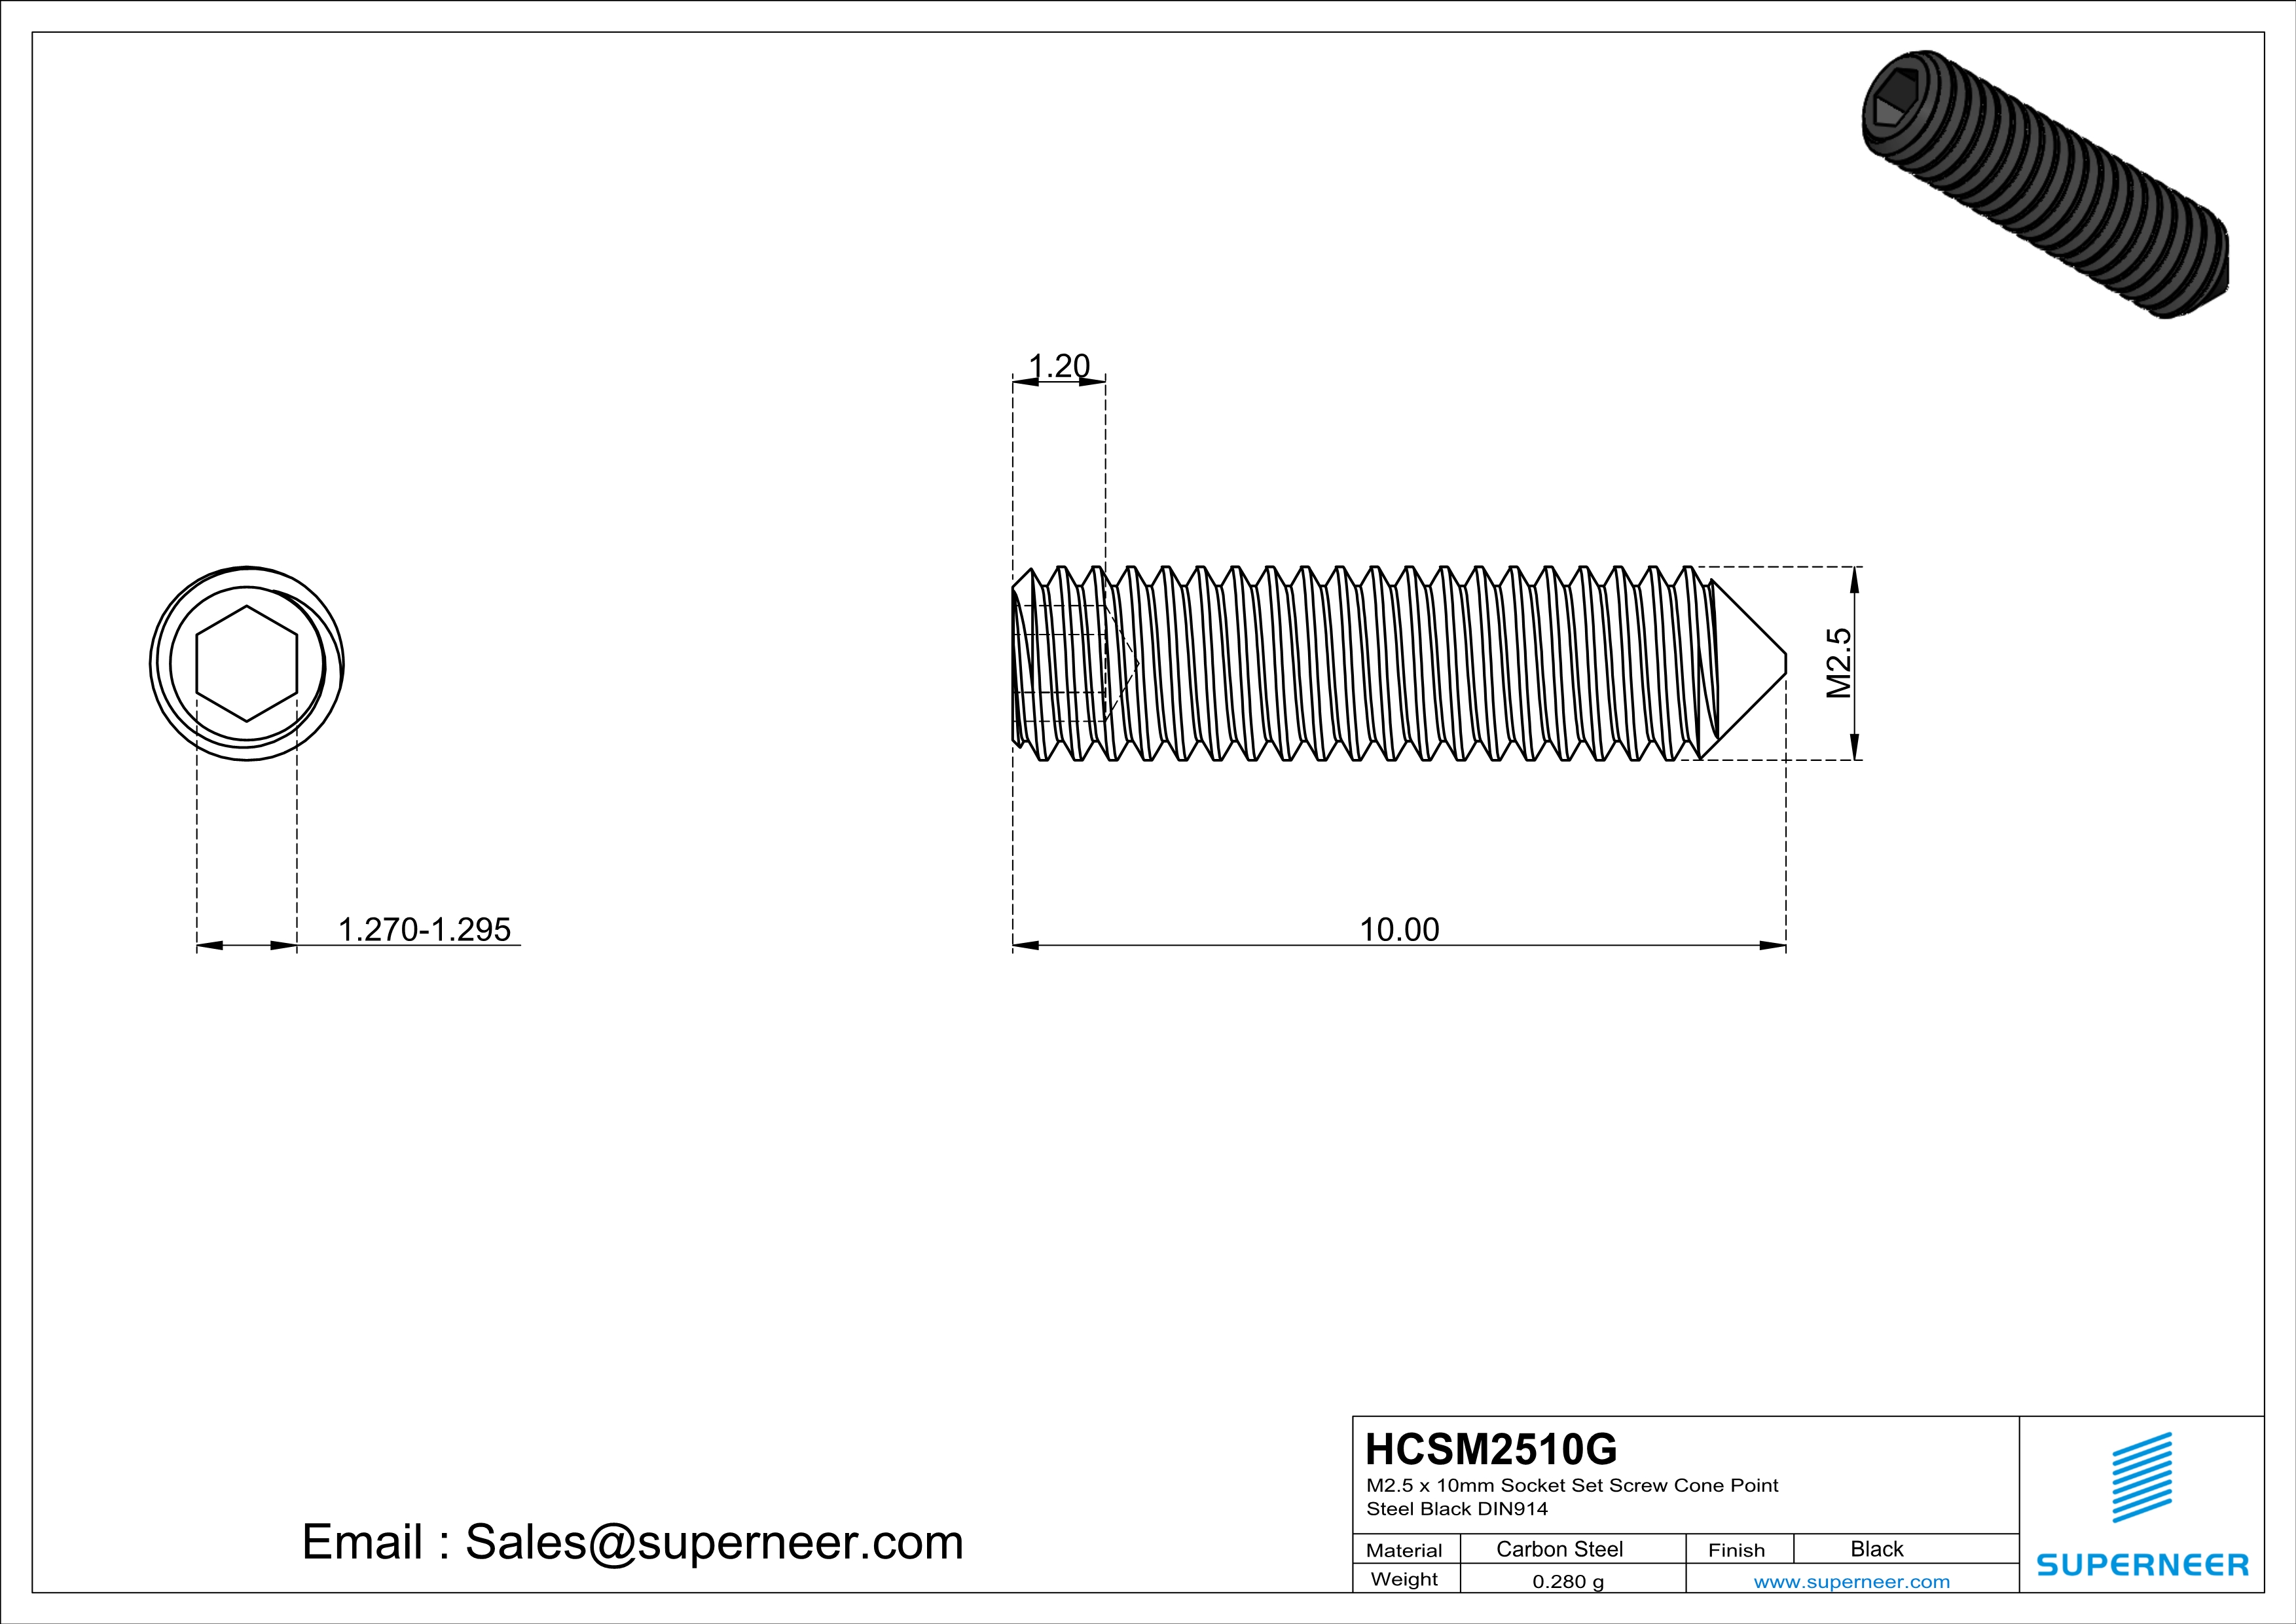 M2.5 x 10mm Socket Set Screw Cone Point 12.9 Carbon Steel Black DIN914